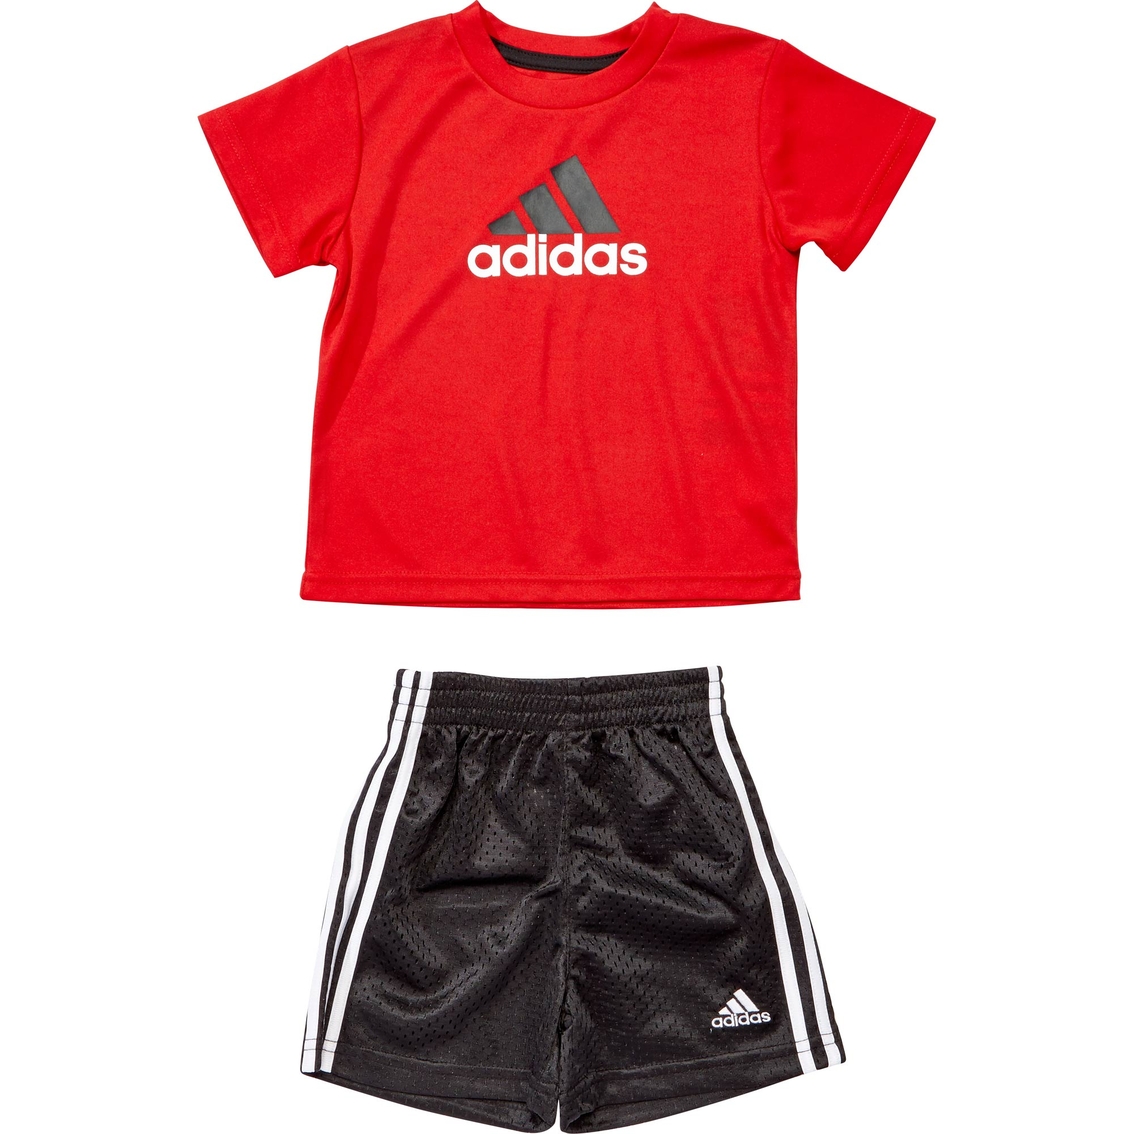 Adidas Infant Boys Logo Tee And Shorts 